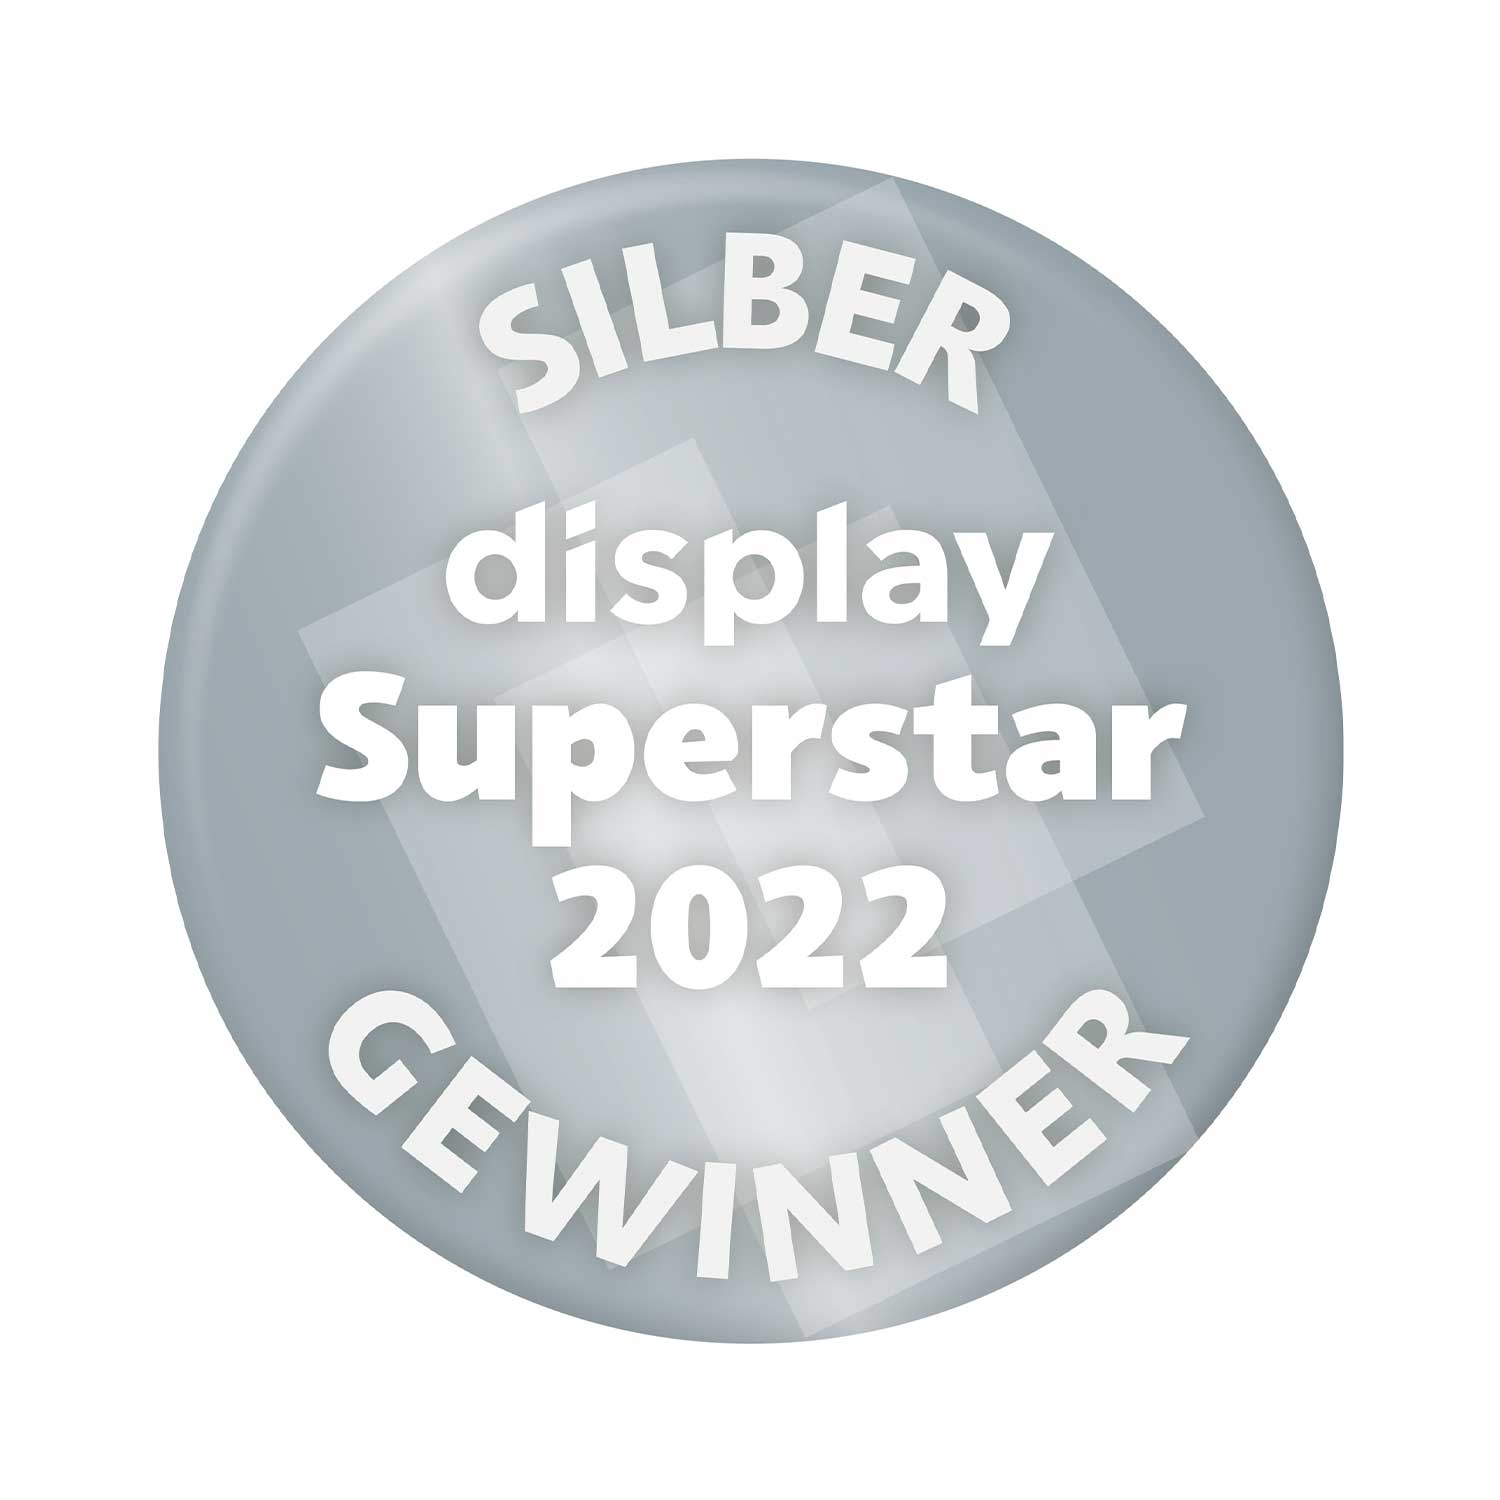 Argent au Display Superstar Award 2022